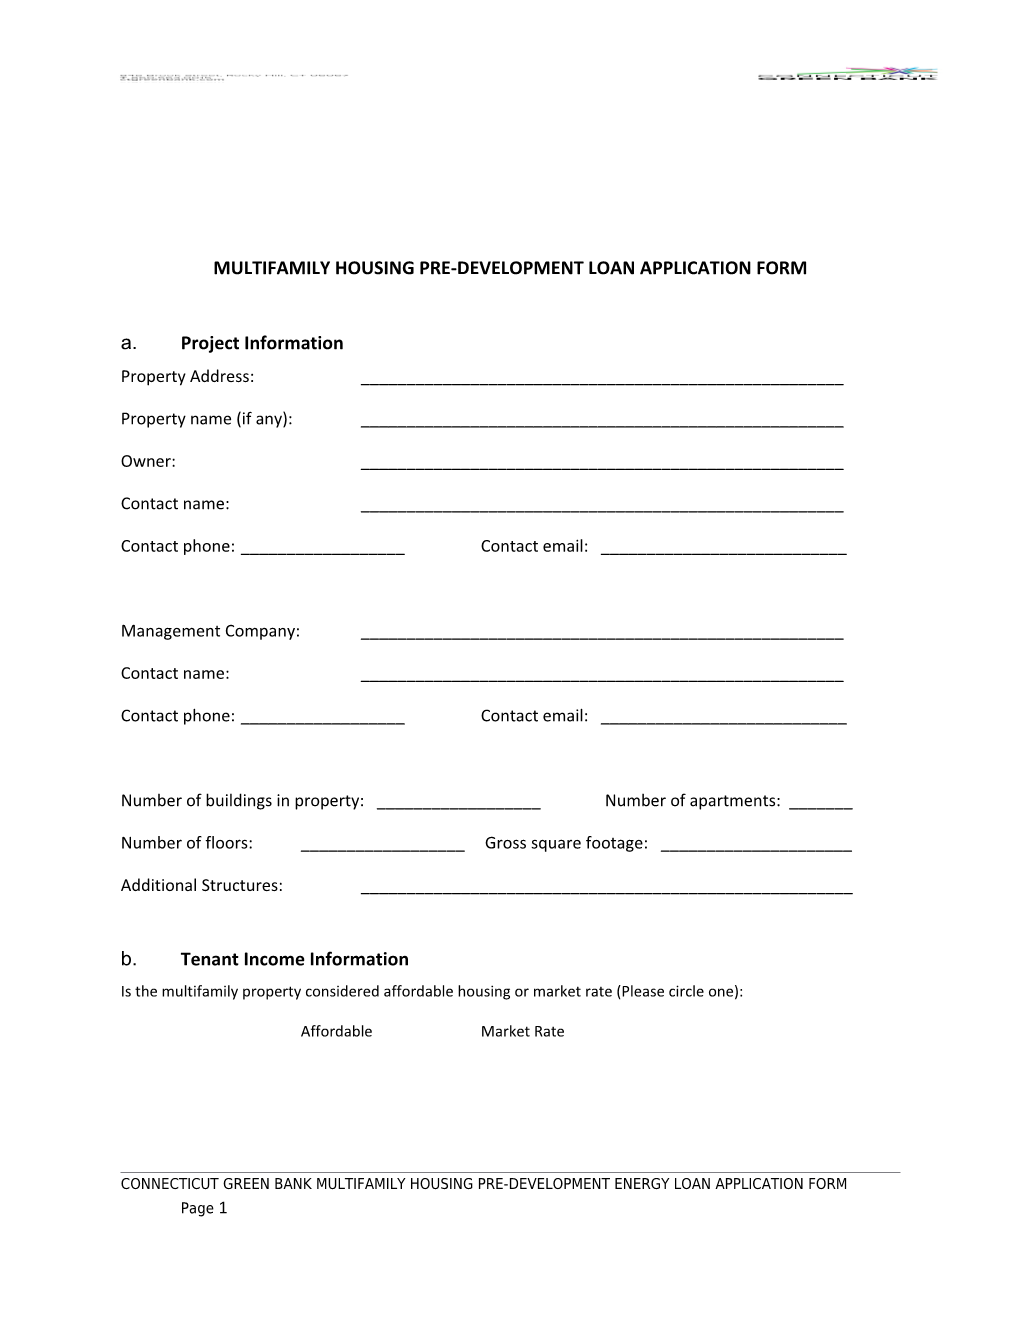 Multifamily Housing Pre-Development Loan Application Form